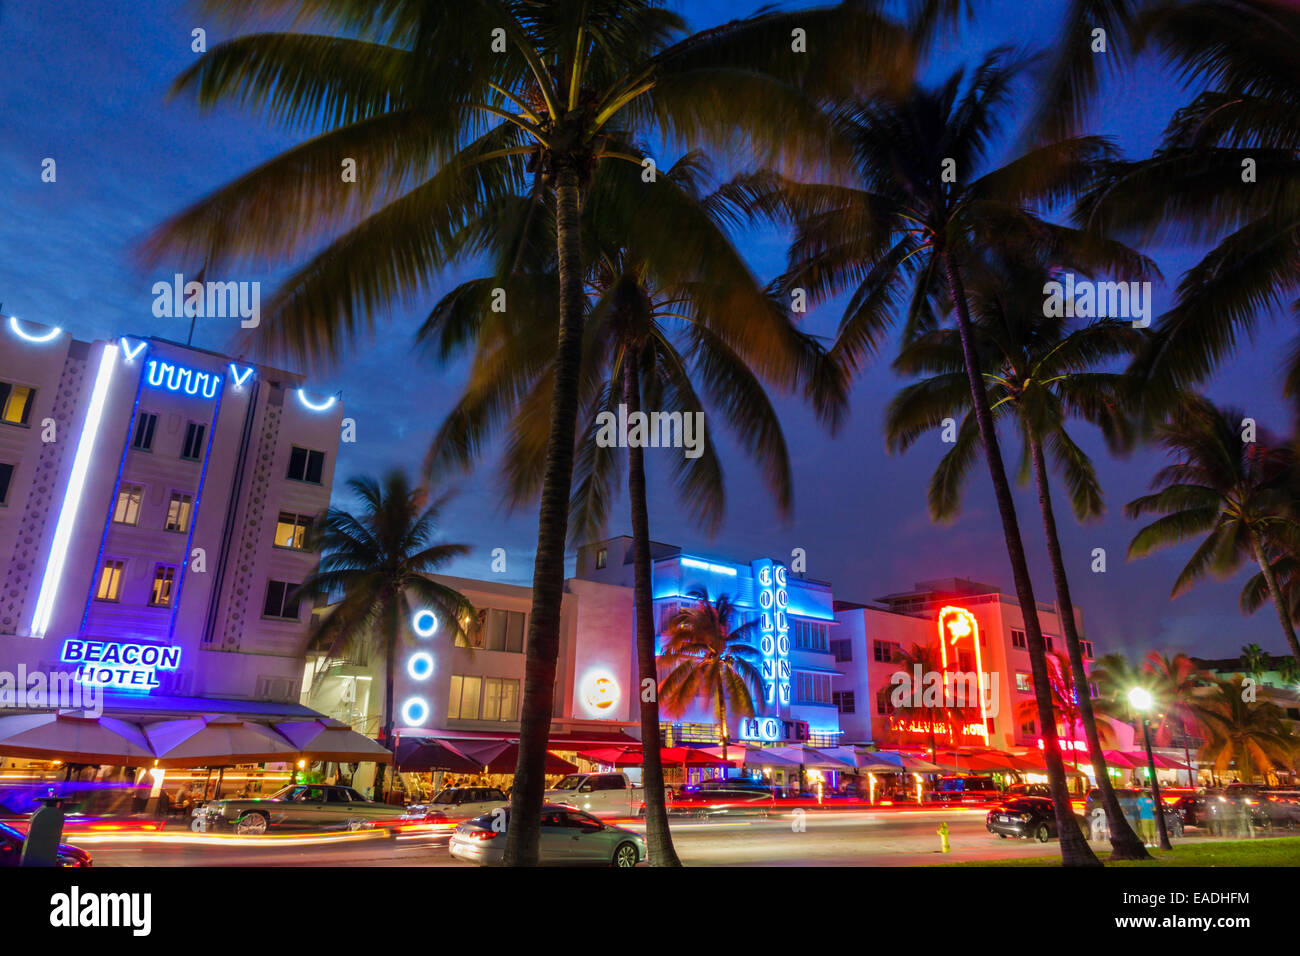 Miami Beach Florida,Ocean Drive,dusk,evening,night,palm trees,Beacon,Colony,hotel,buildings,neon,traffic,FL140930013 Stock Photo